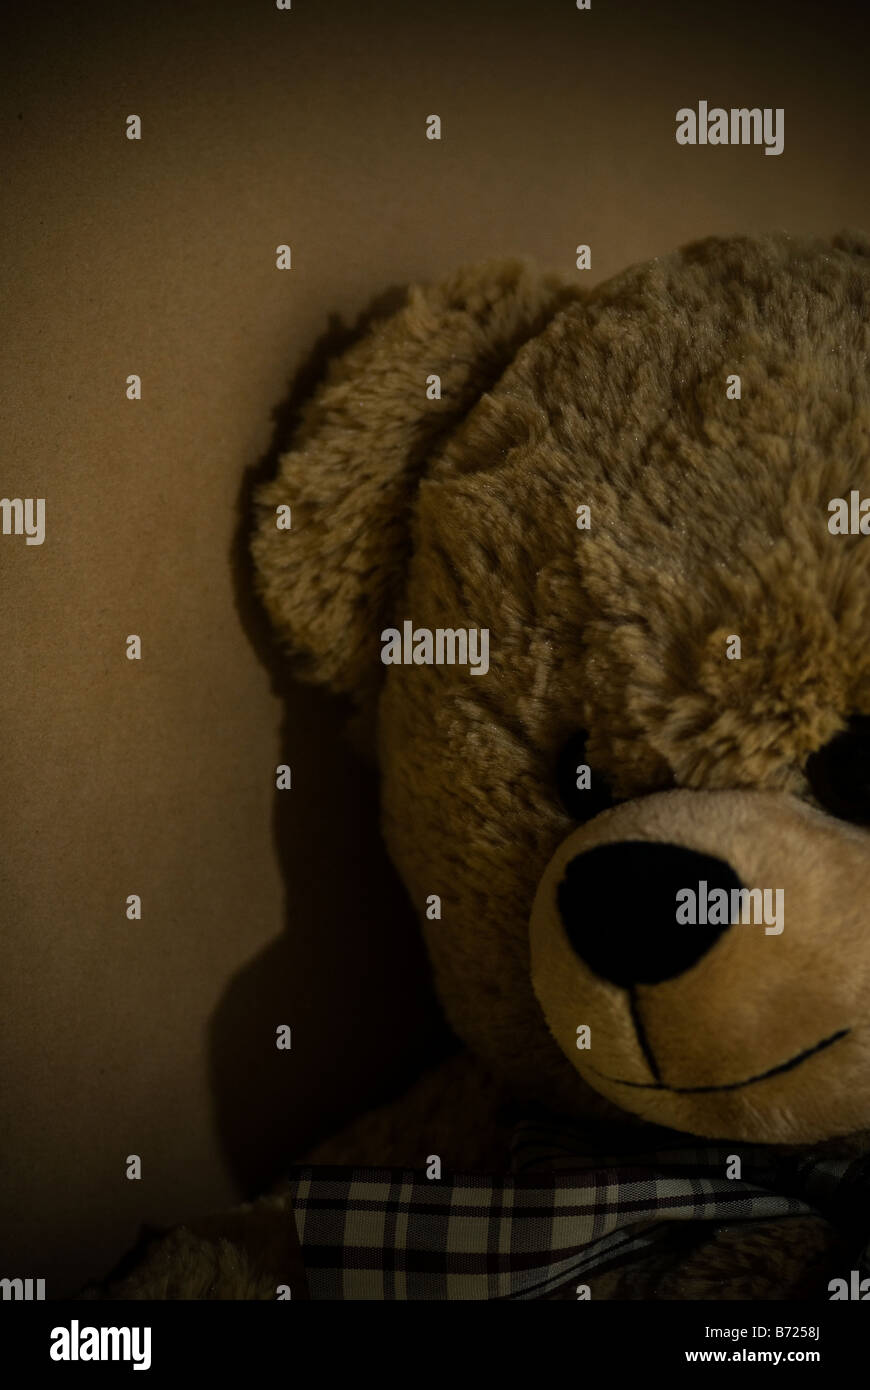 Angry teddy bear Stock Photo